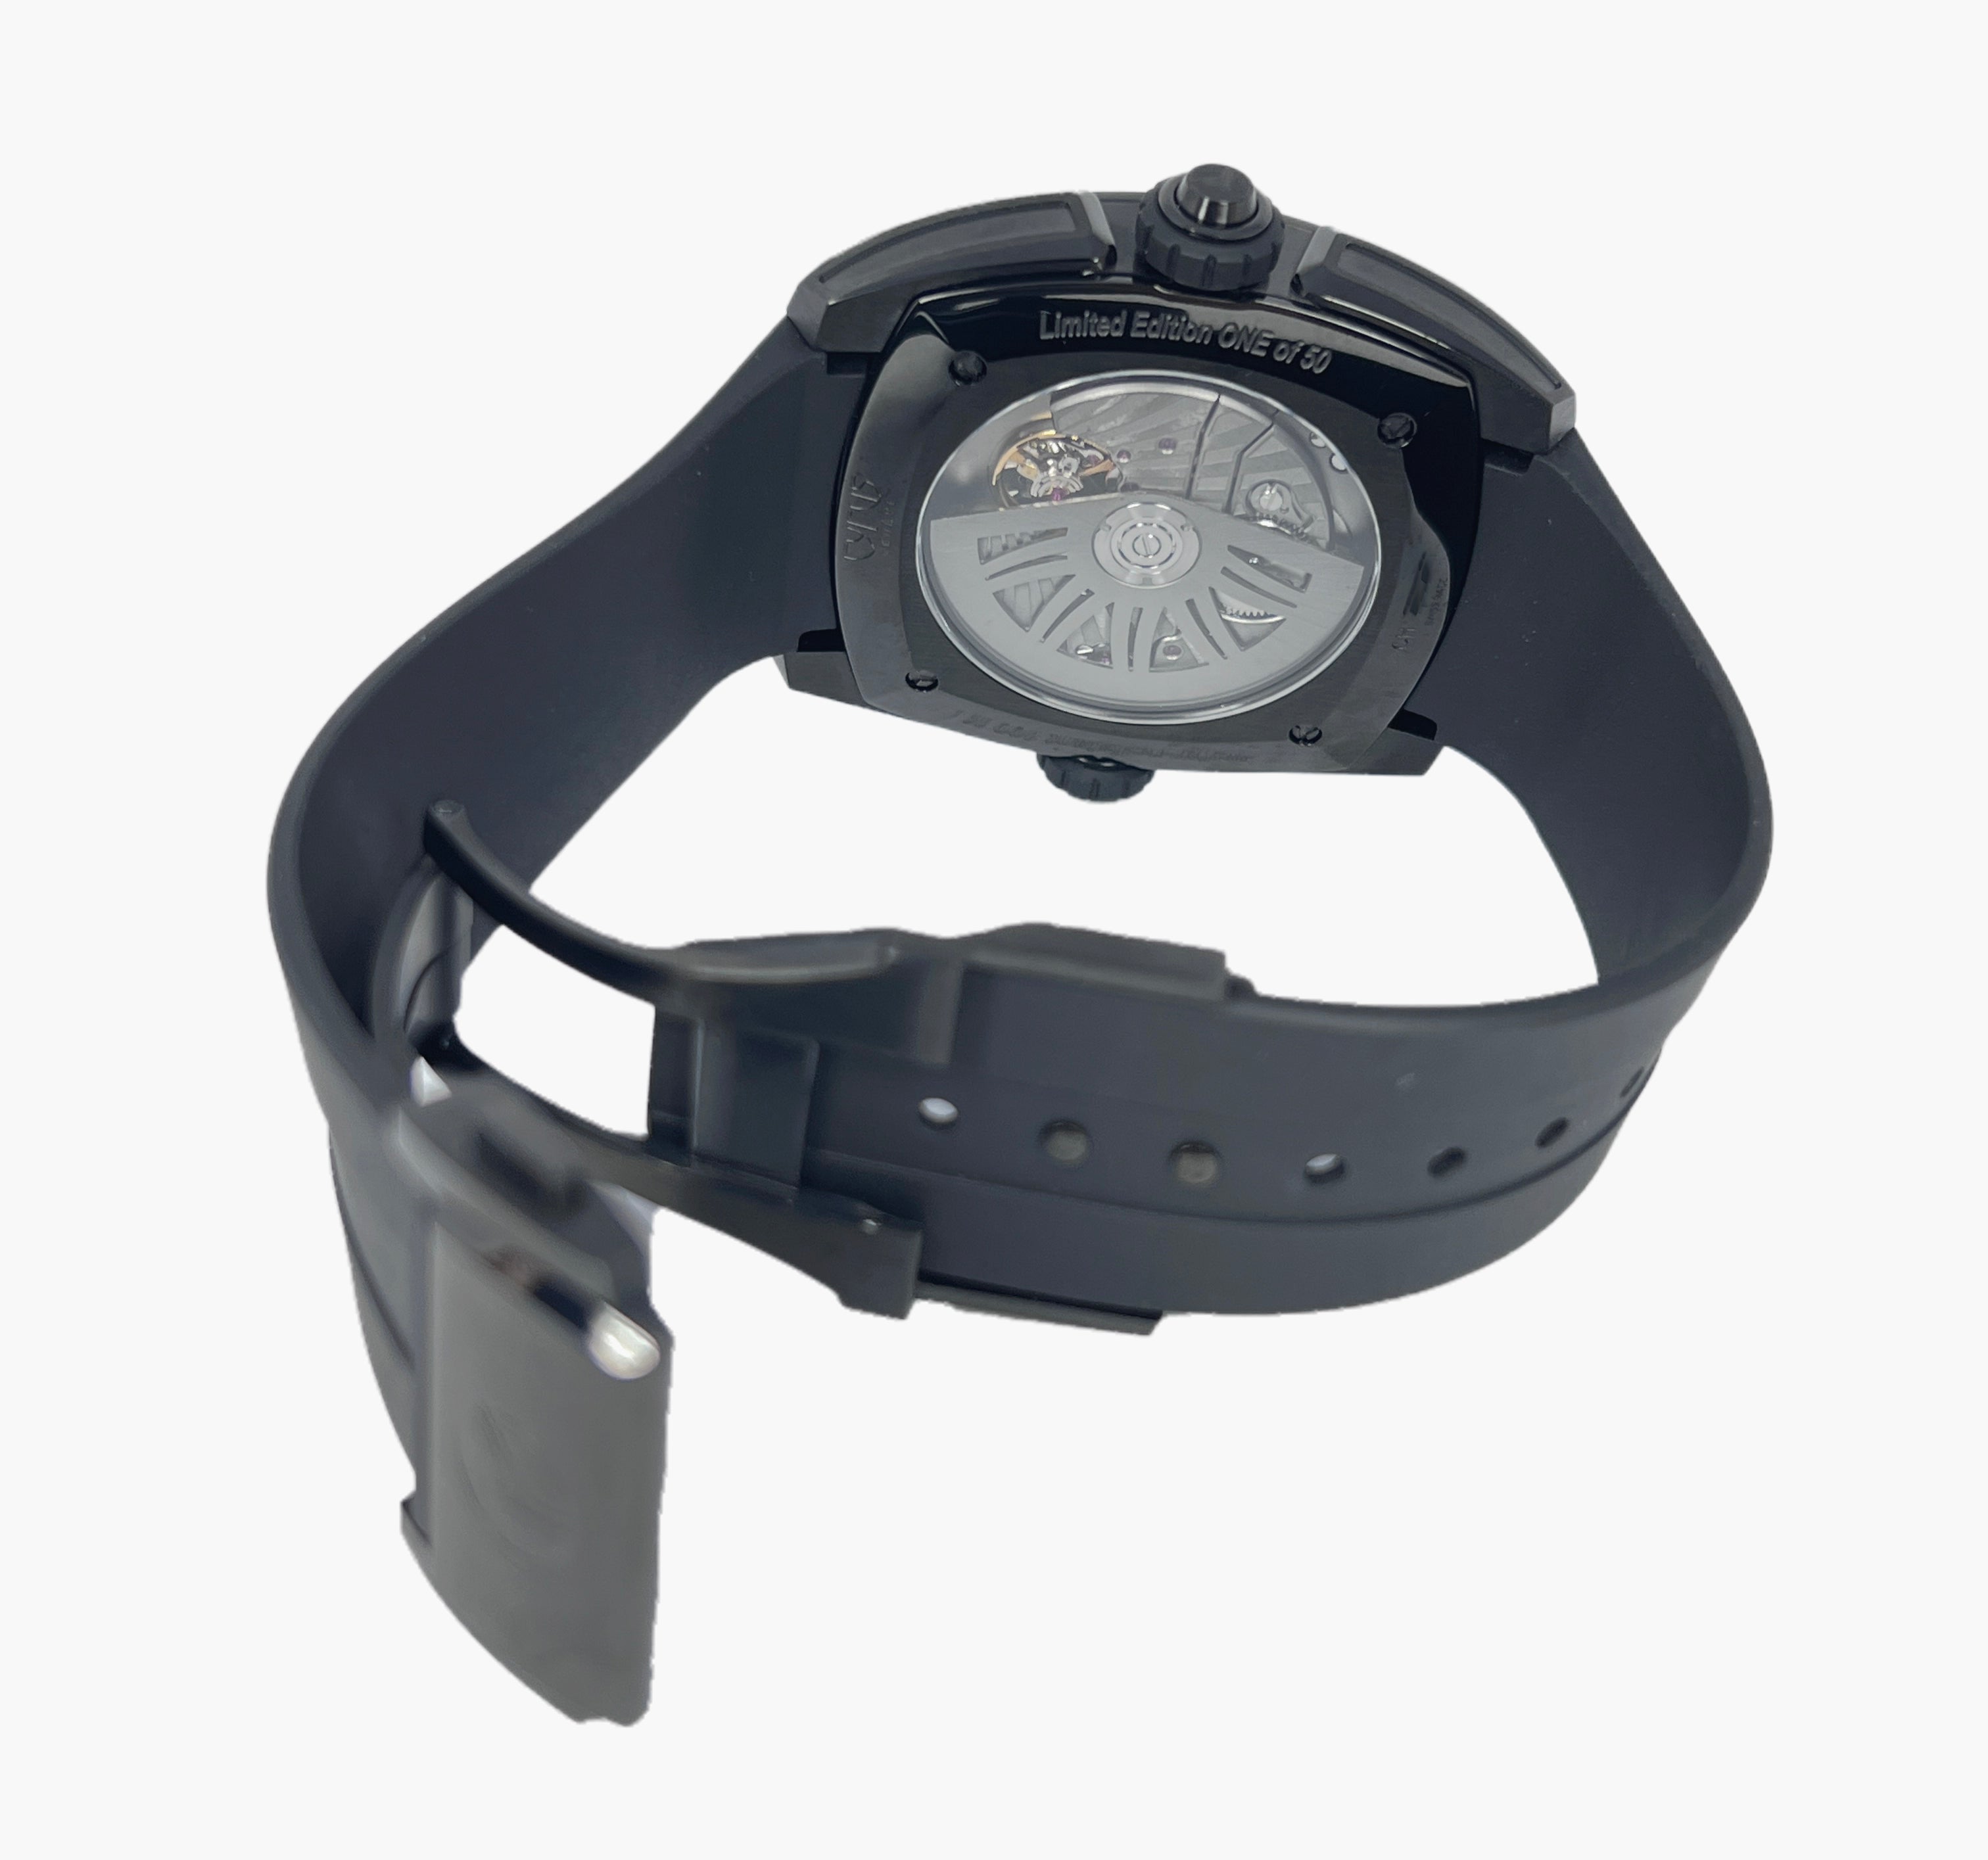 Cyrus Klepcys GMT Retrograde Black DLC Titanium Men's Watch